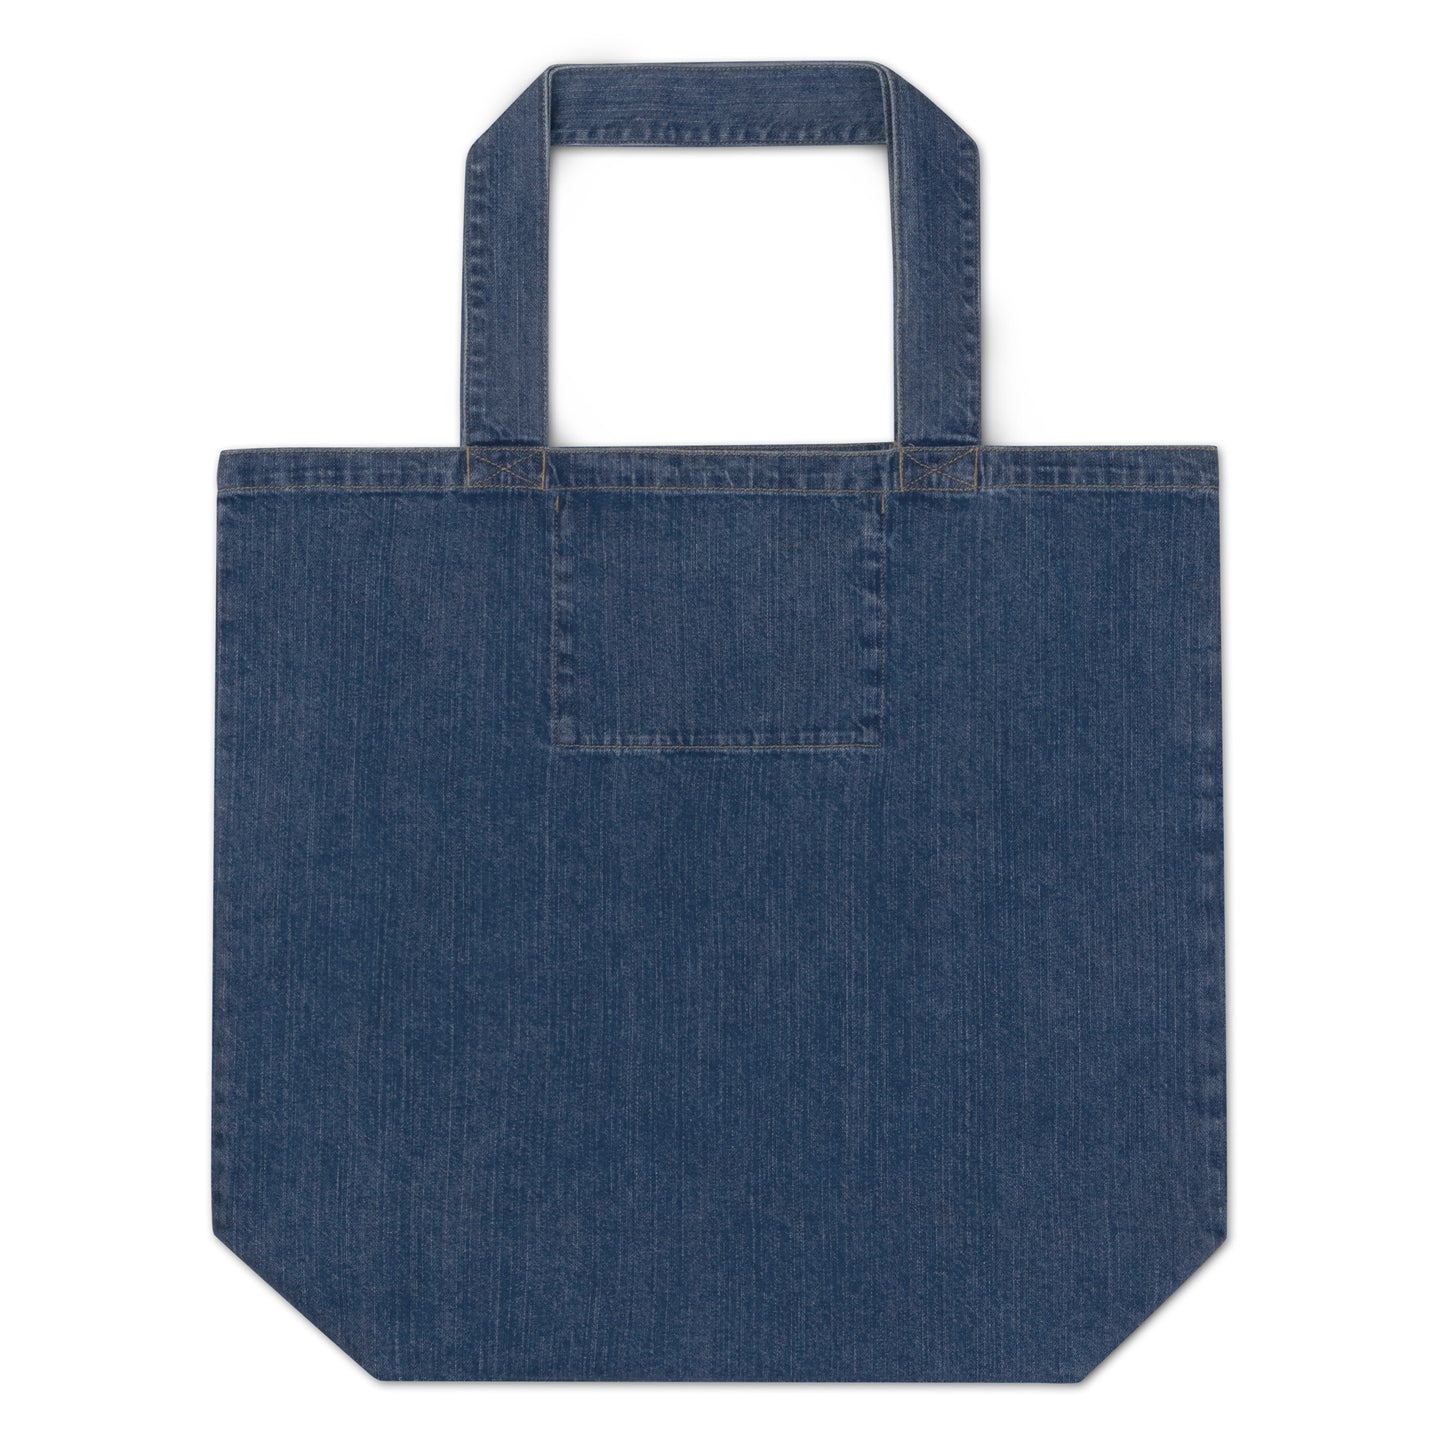 Organic denim tote bag - The Delicate